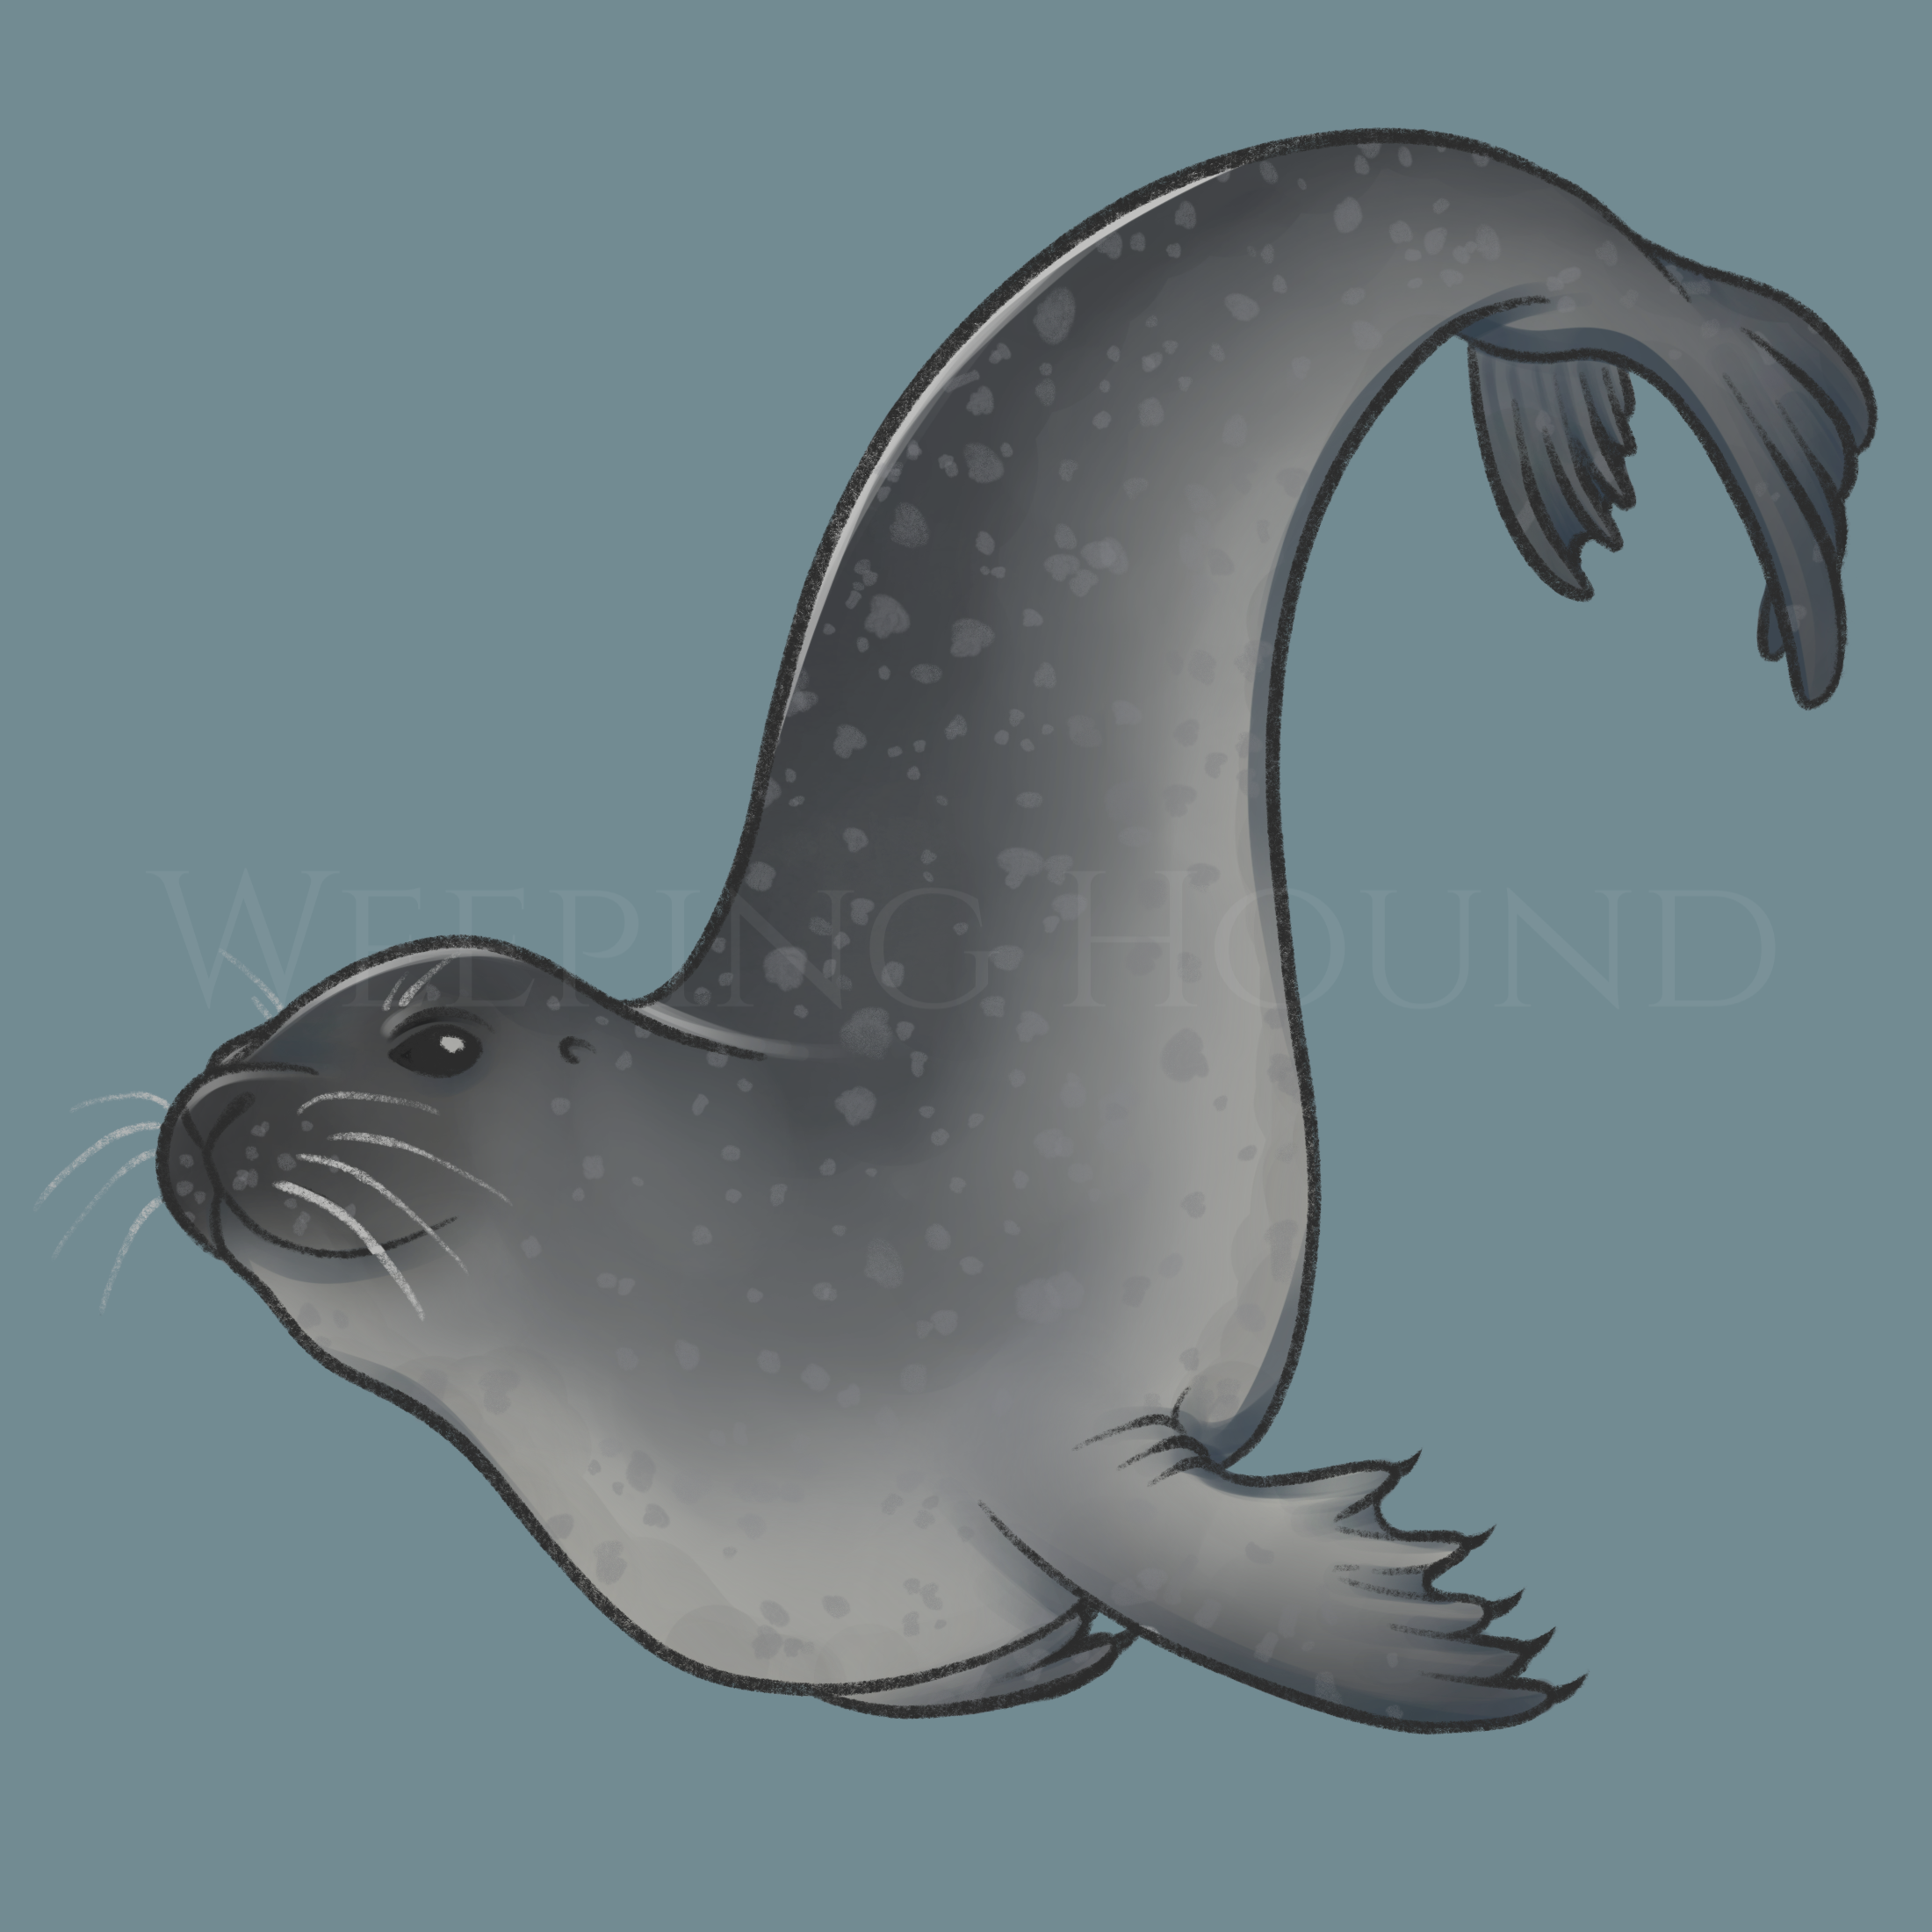 A seal-spun daughter of the tides by weepinghoundart on DeviantArt